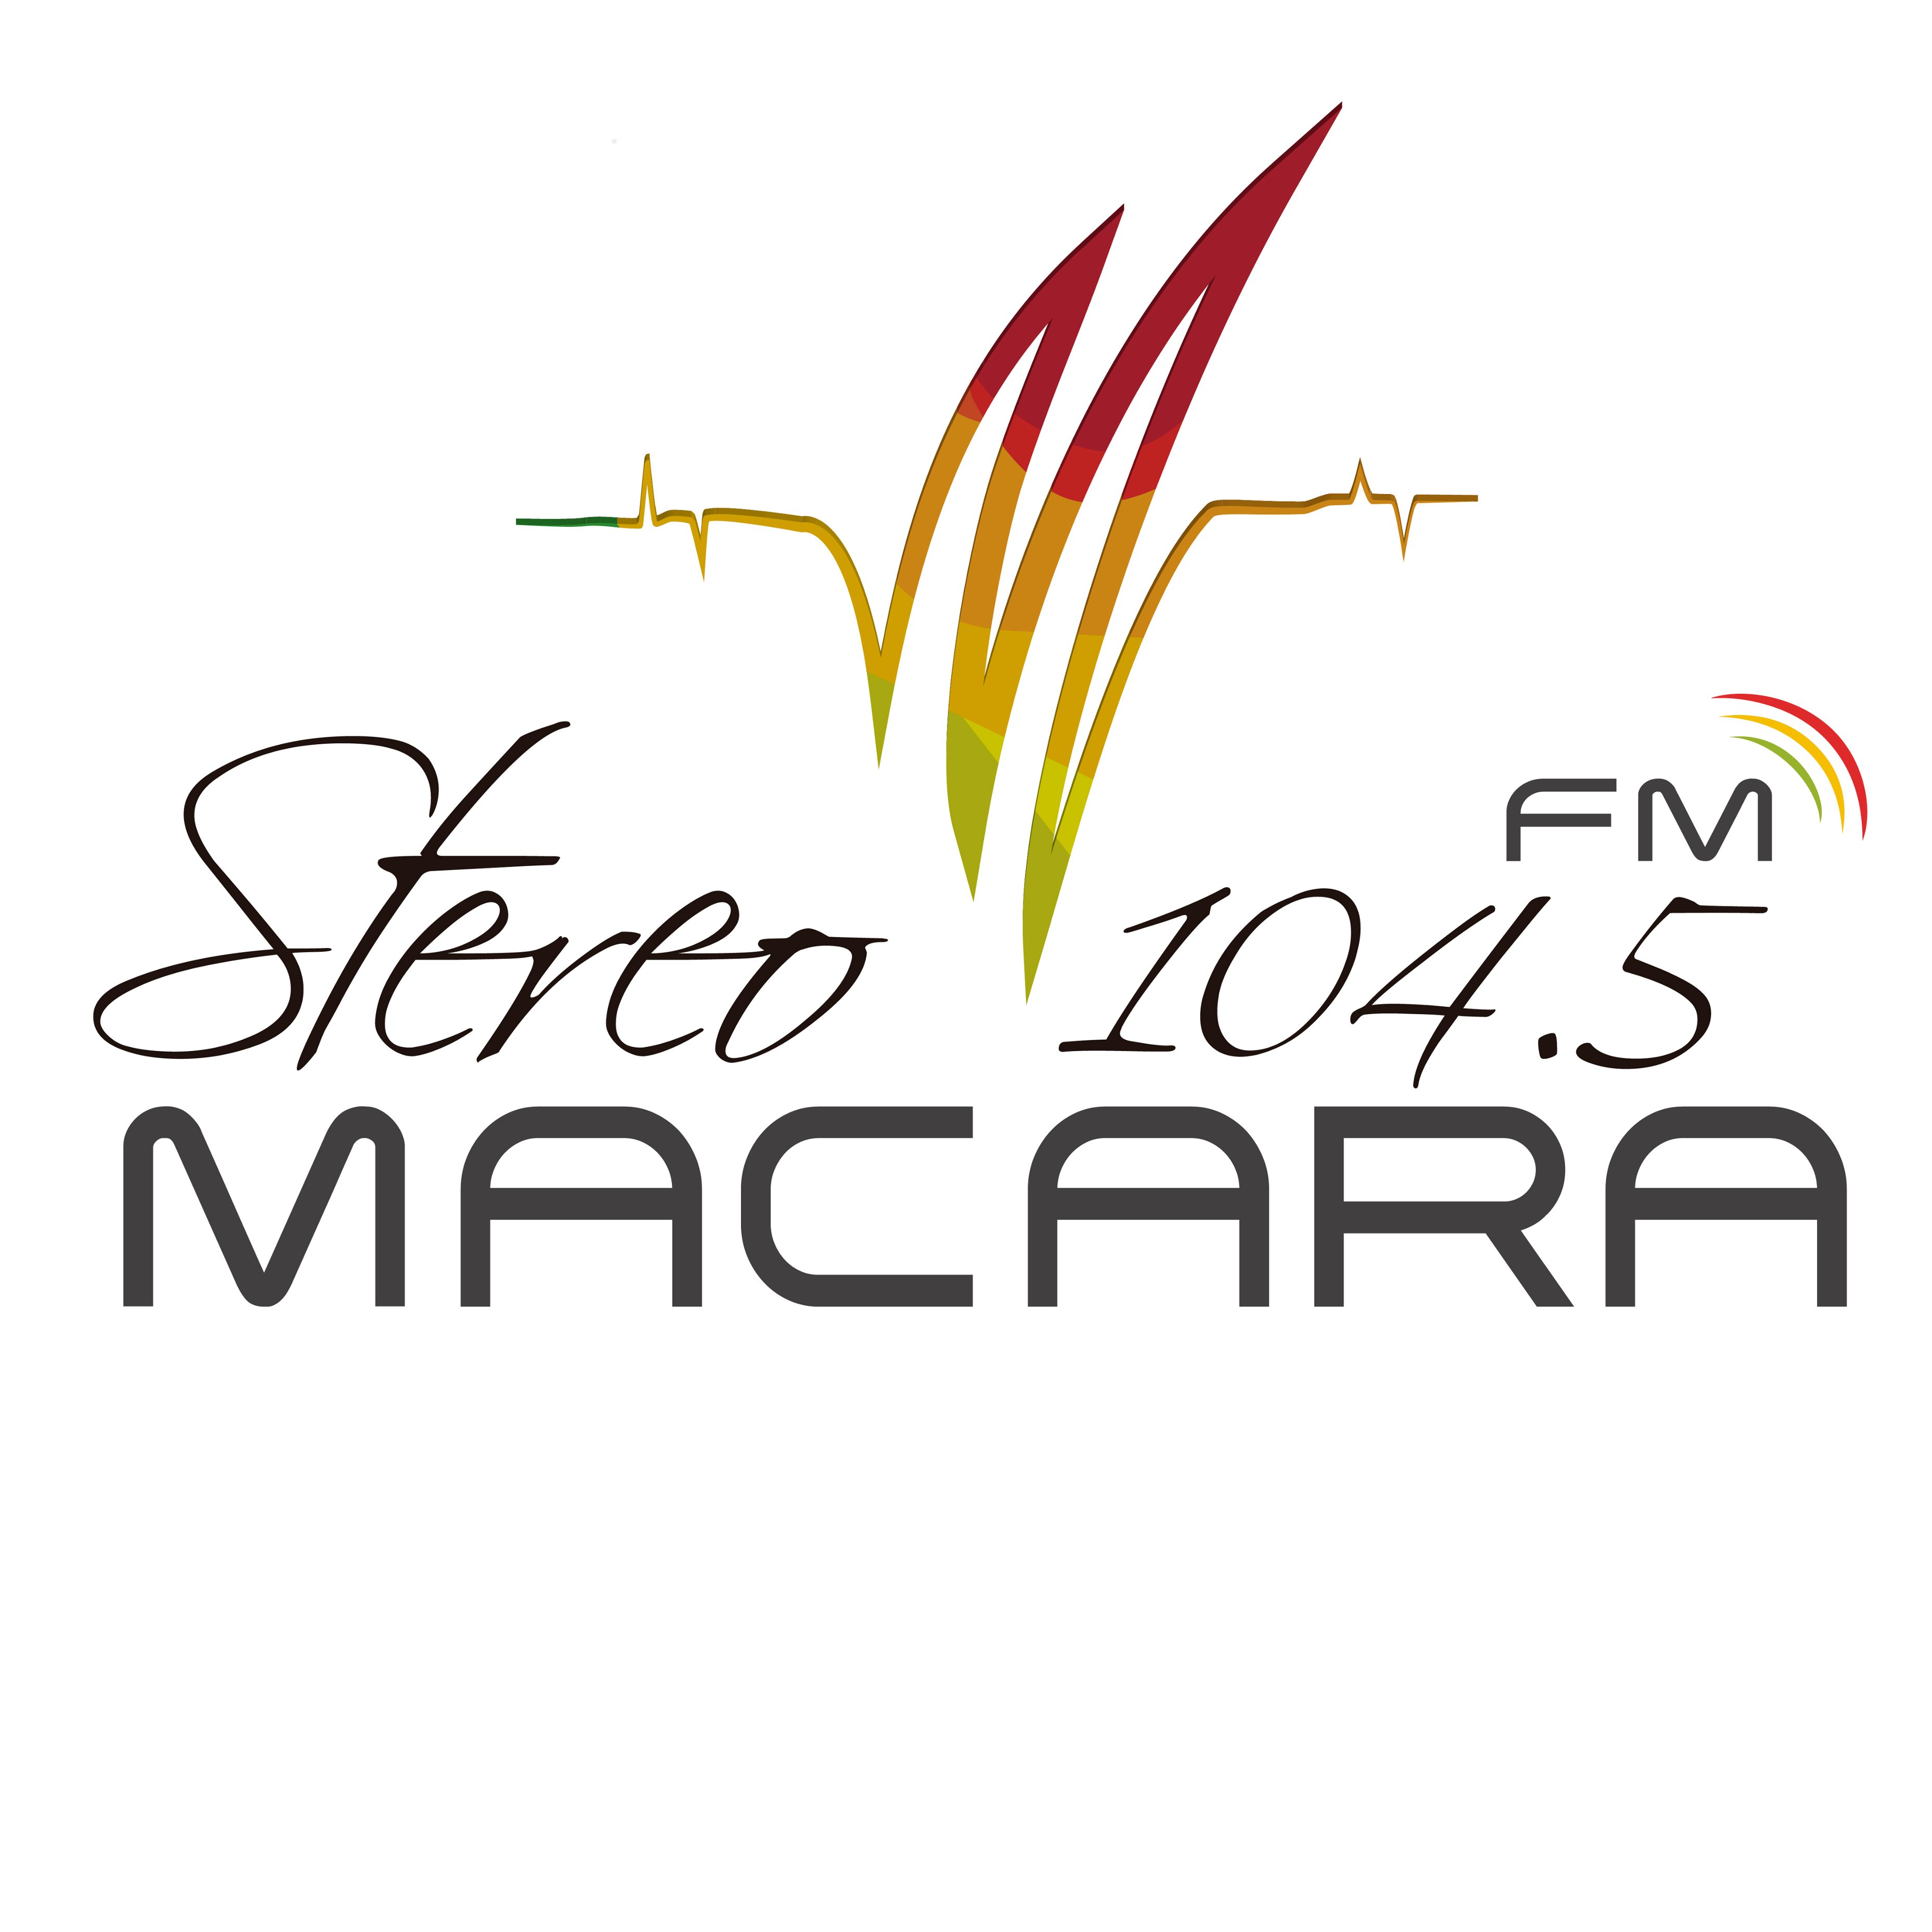 STEREO MACARA 104.5 Mhz